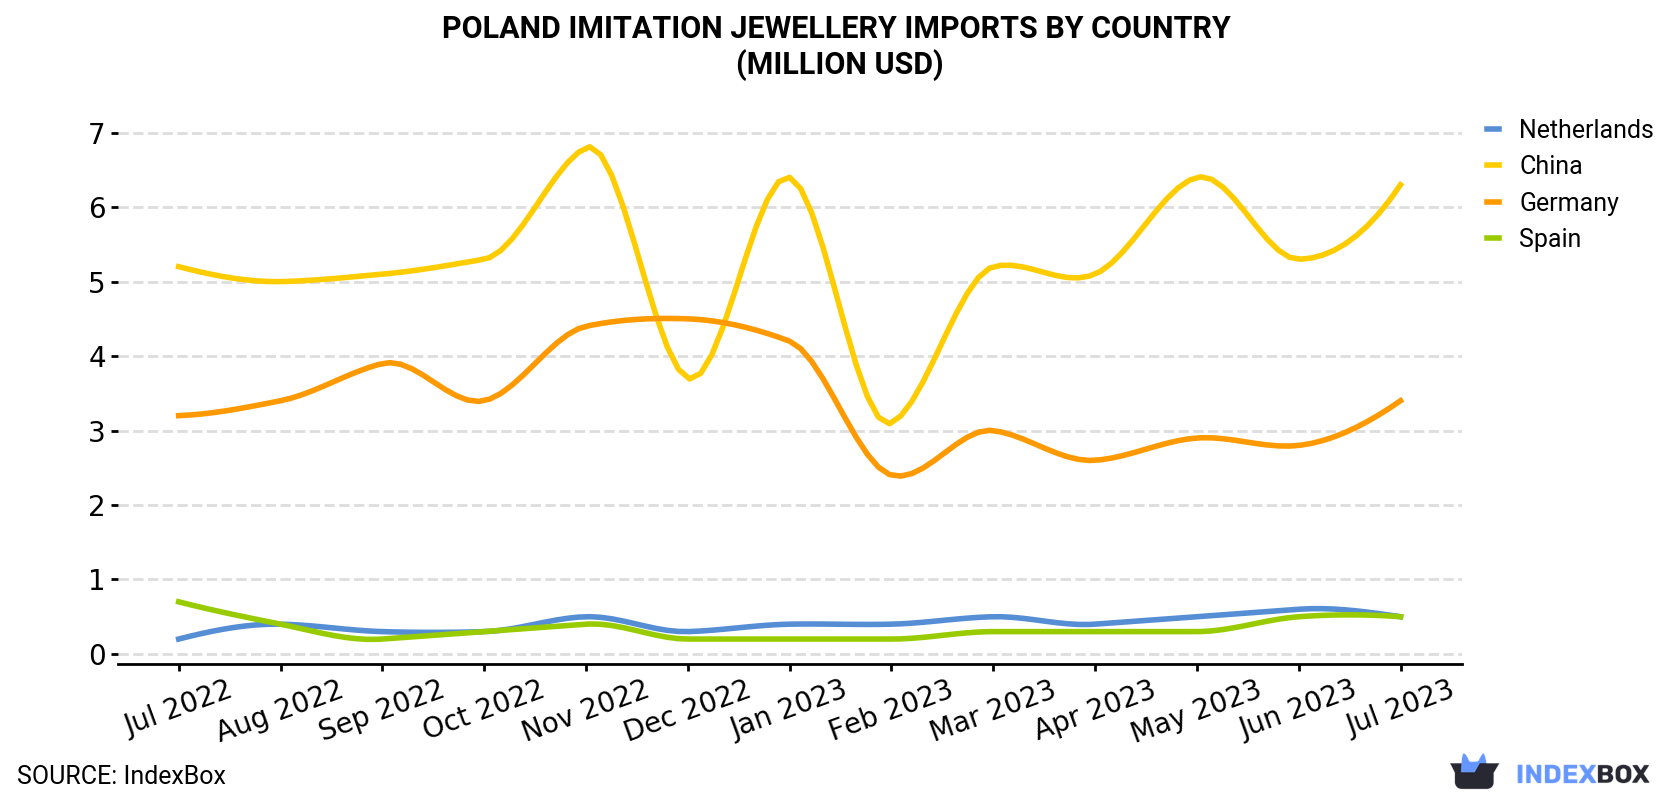 Poland Imitation Jewellery Imports By Country (Million USD)